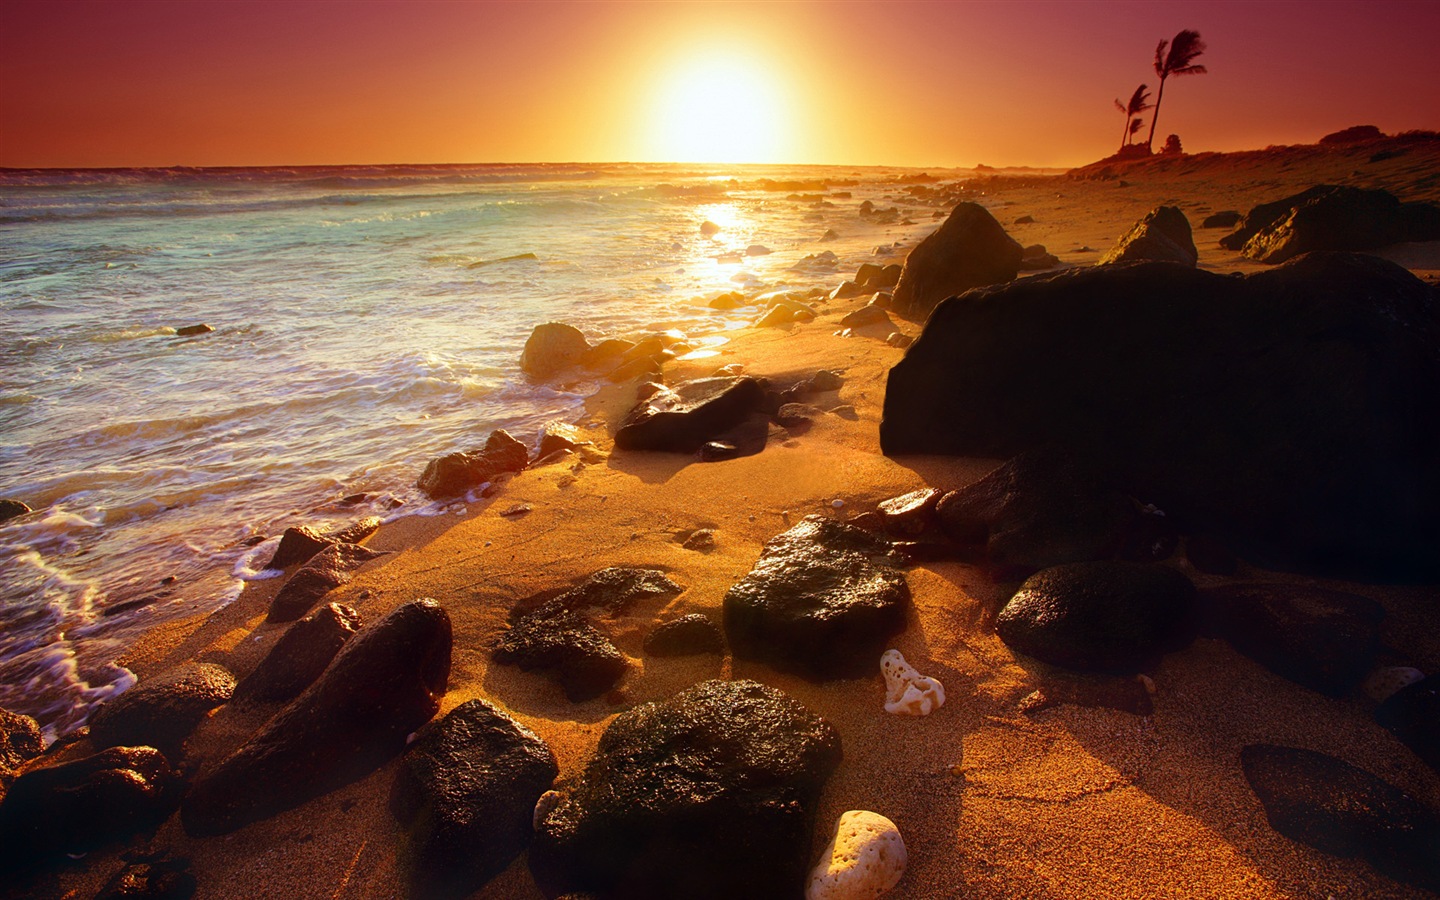 Windows 8 theme wallpaper: Beach sunrise and sunset views #1 - 1440x900